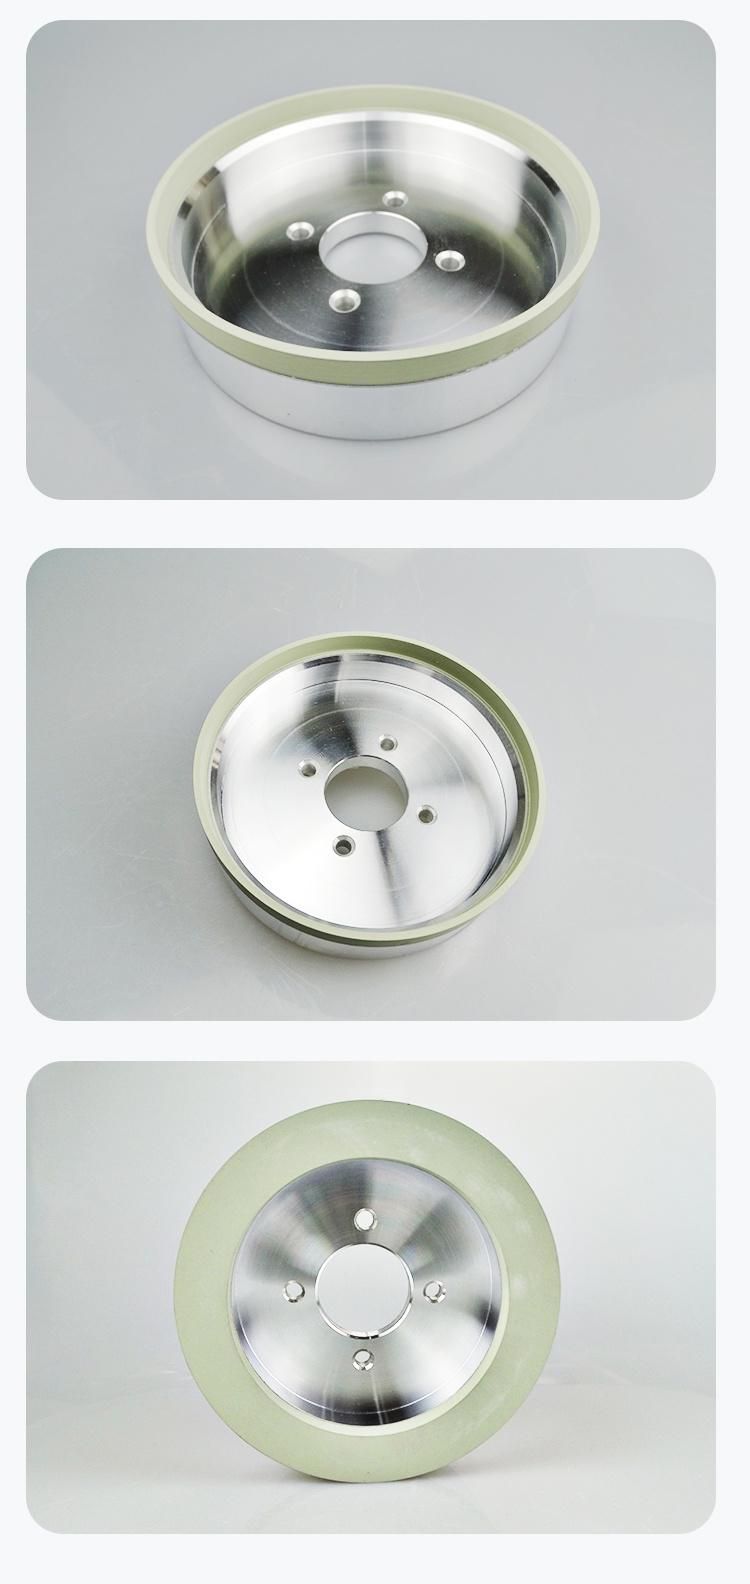 Vitrified Bond Diamond Grinding Wheel for PCBN Cutting Tools